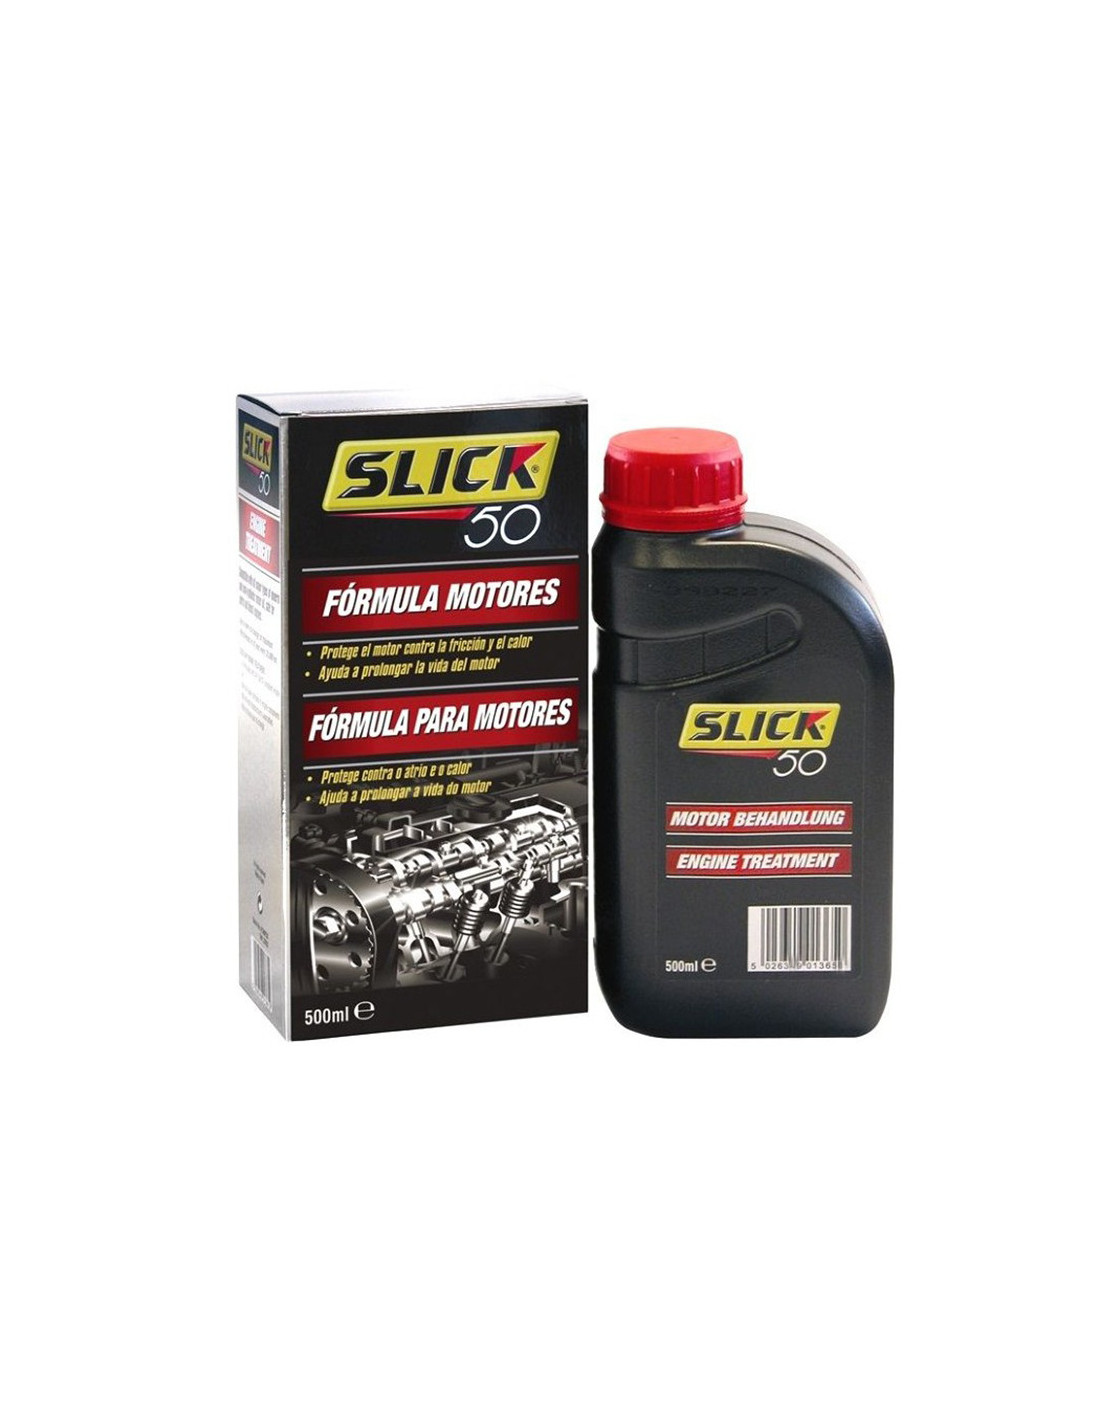 Comprar Slick 50 Formula Motores | Compralubricantes.com